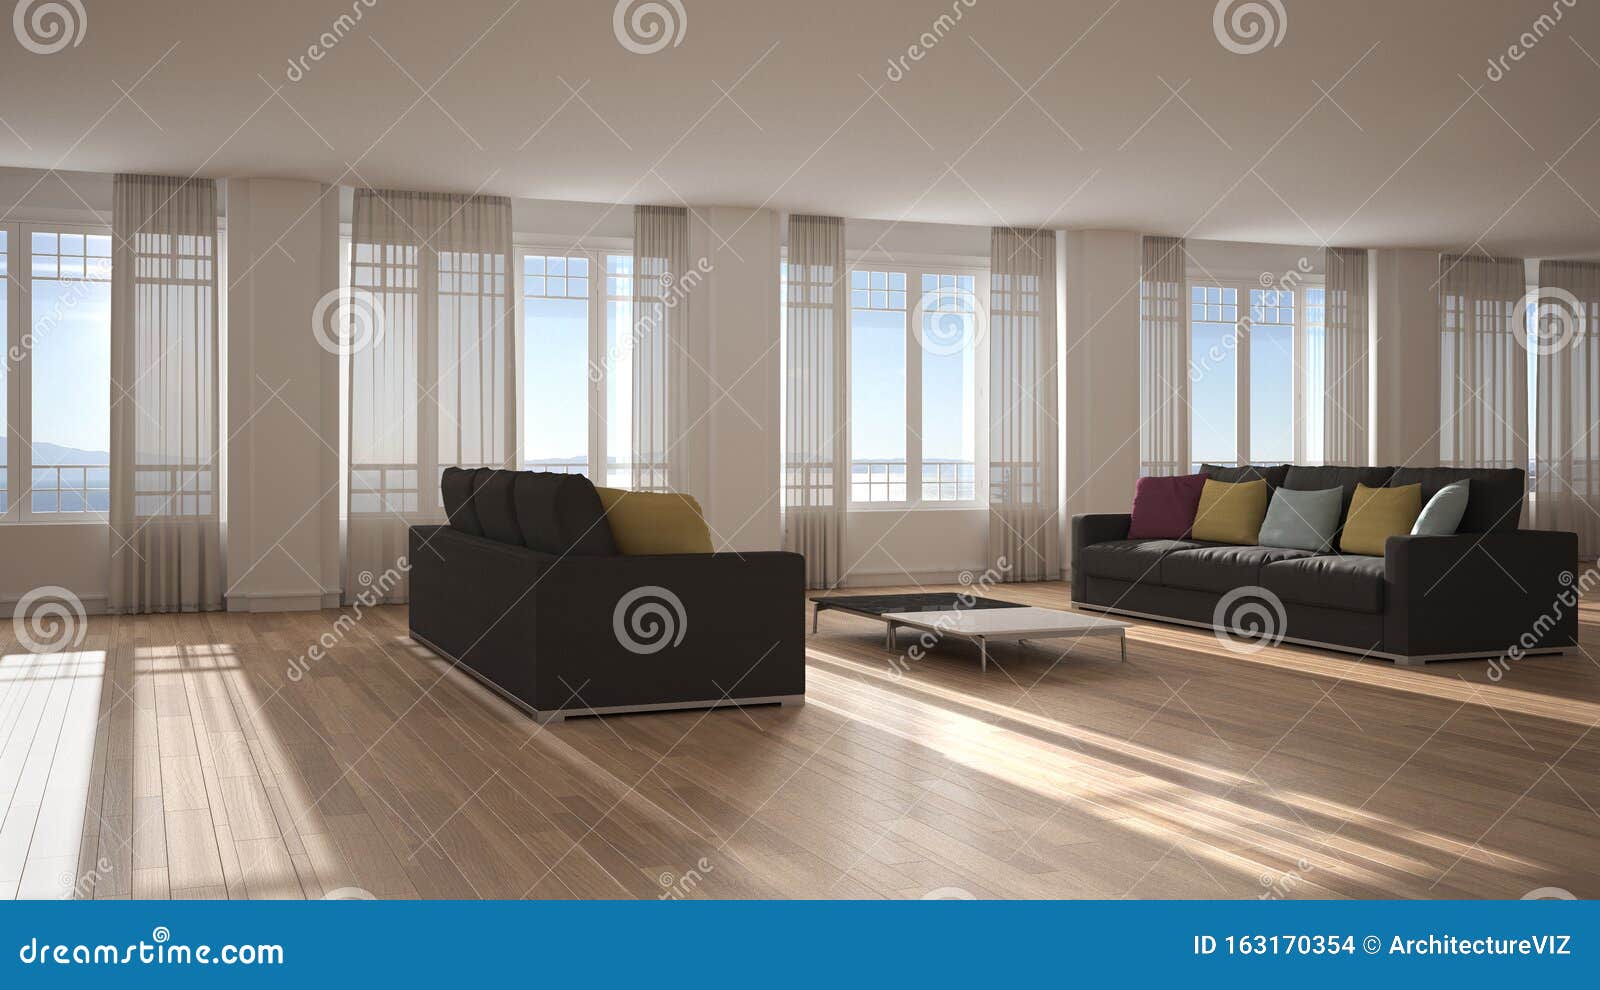 Open Space With Sofa Interior Design